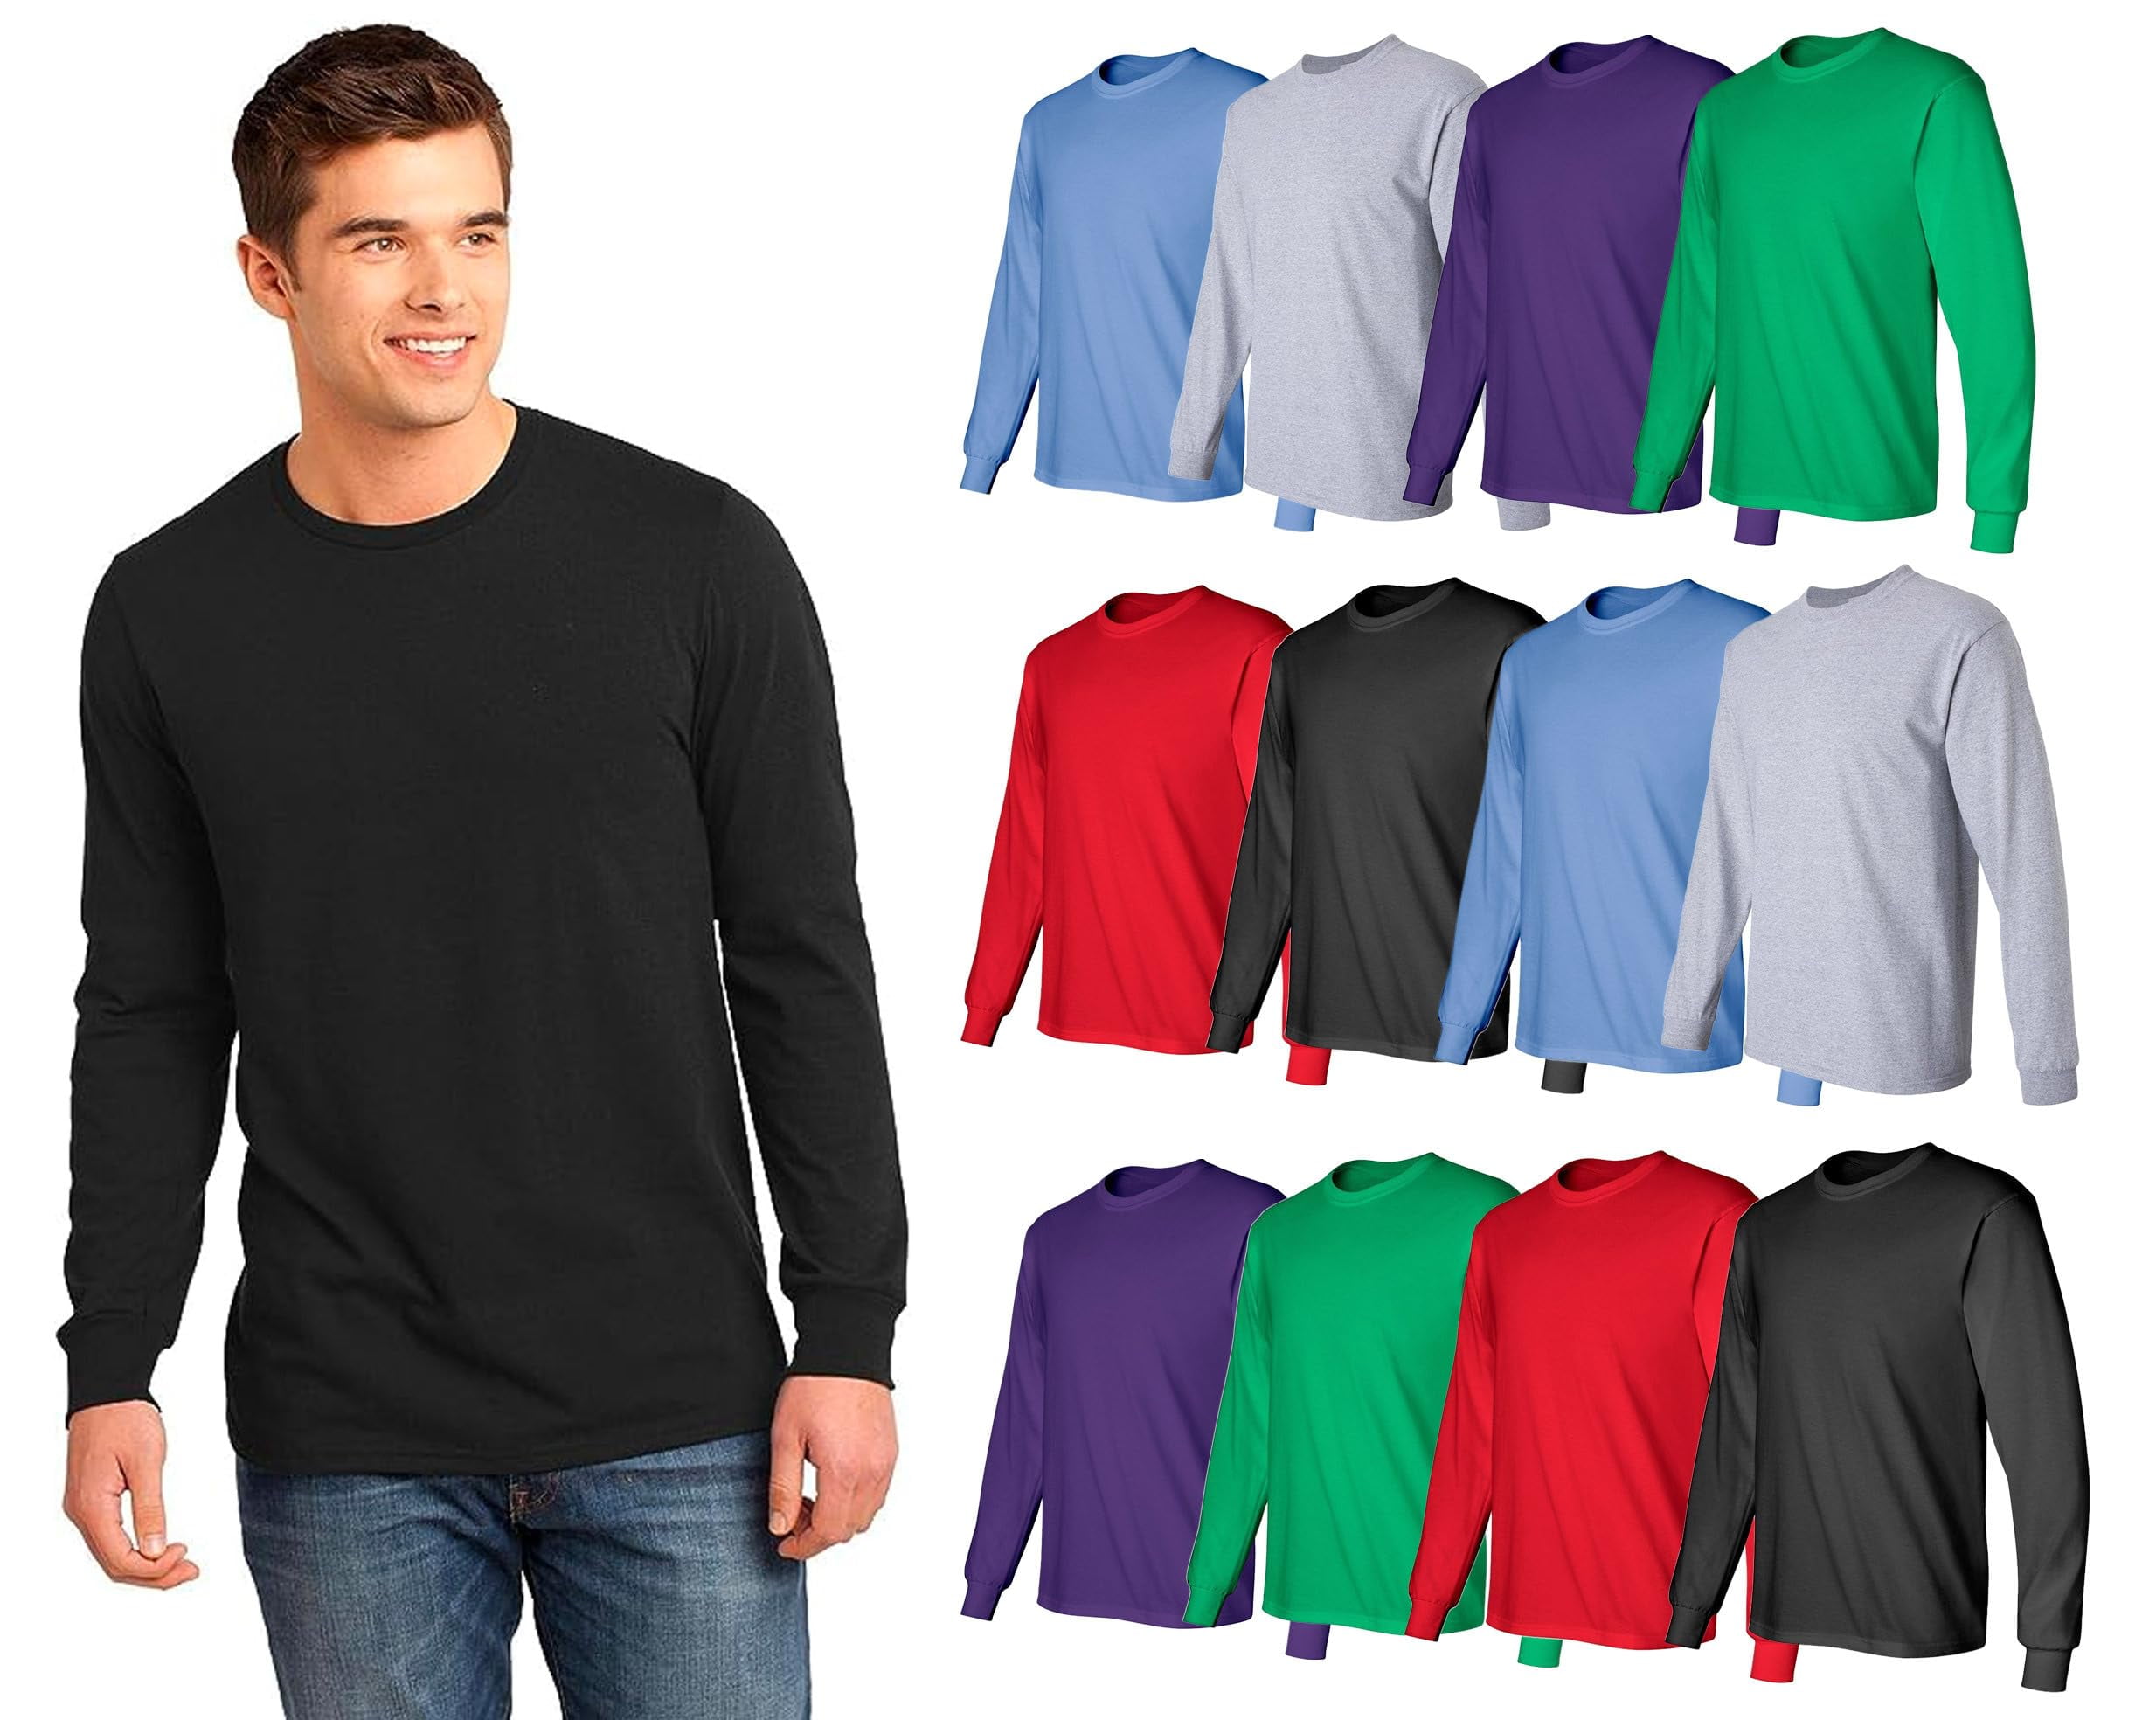 BILLIONHATS Mens Long Sleeve Colorful T-Shirts, 100% Cotton - Crew Neck Bulk Tees for Men, Wholesale Sleeved Tshirt Packs (12 Pack Long Sleeve, Small)